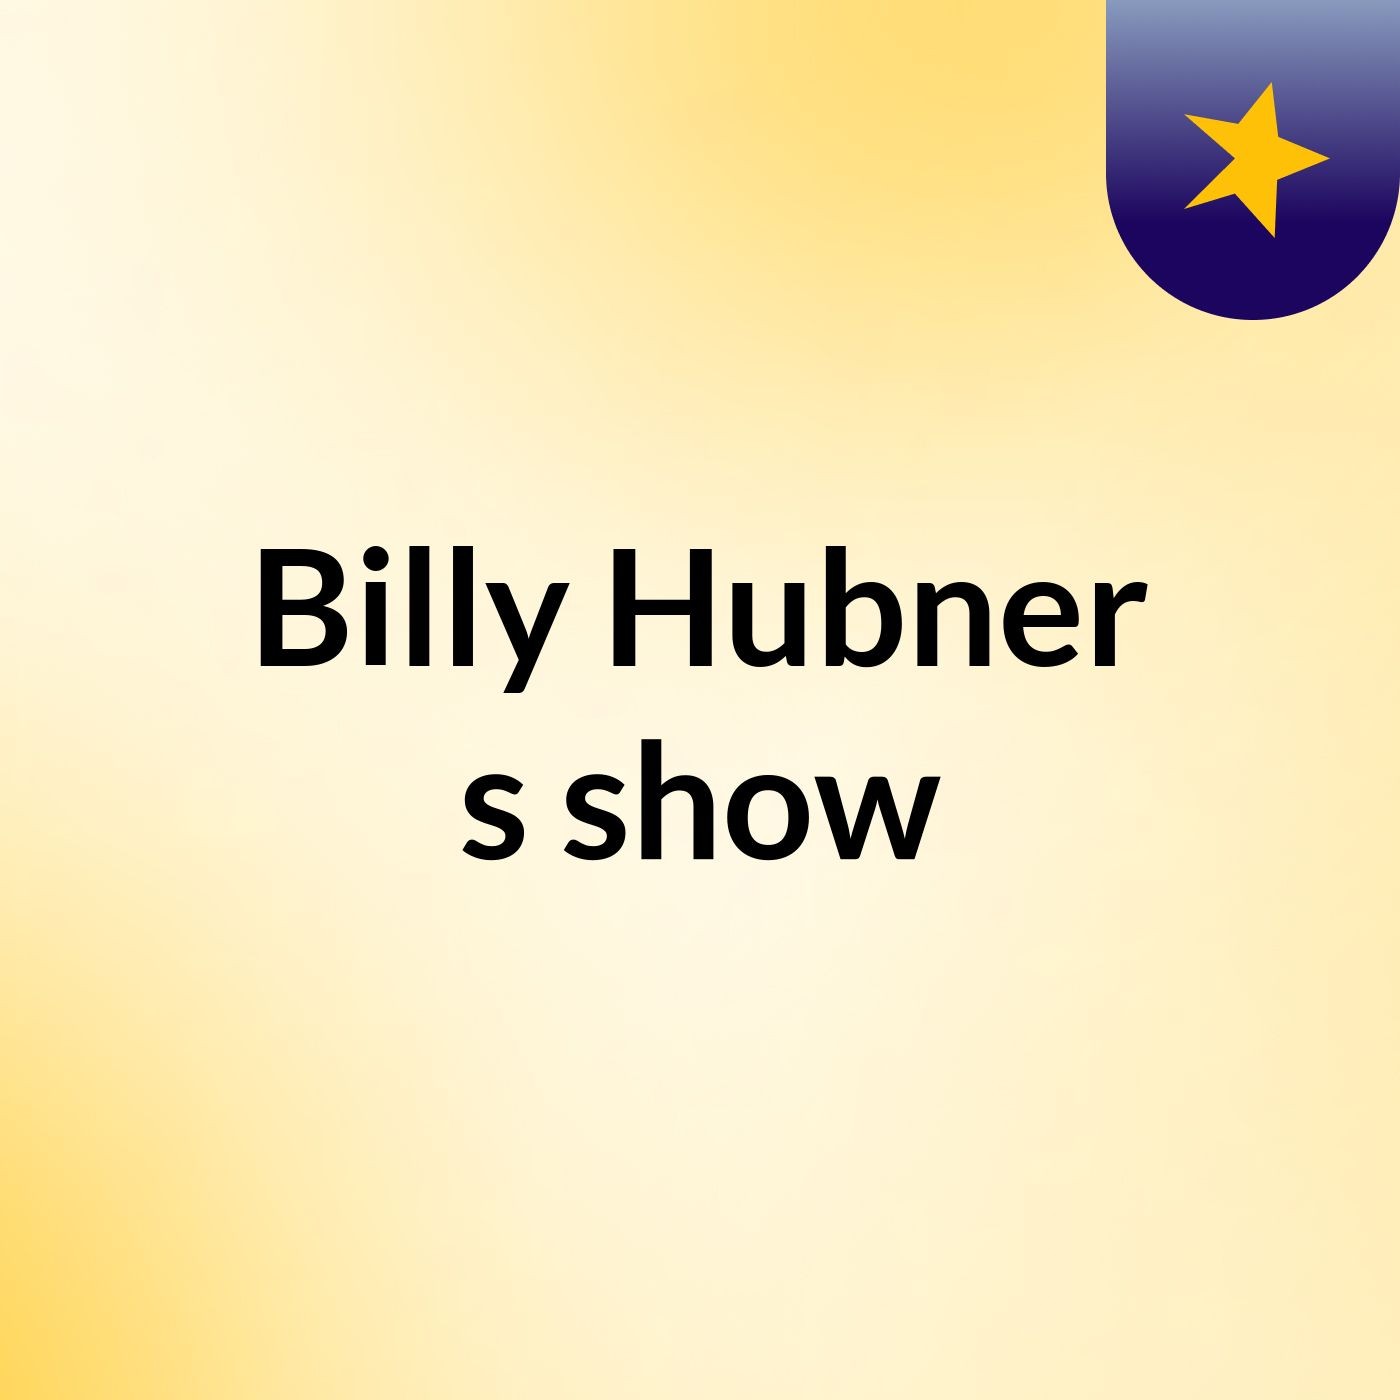 Episode 7 - Billy Hubner's show